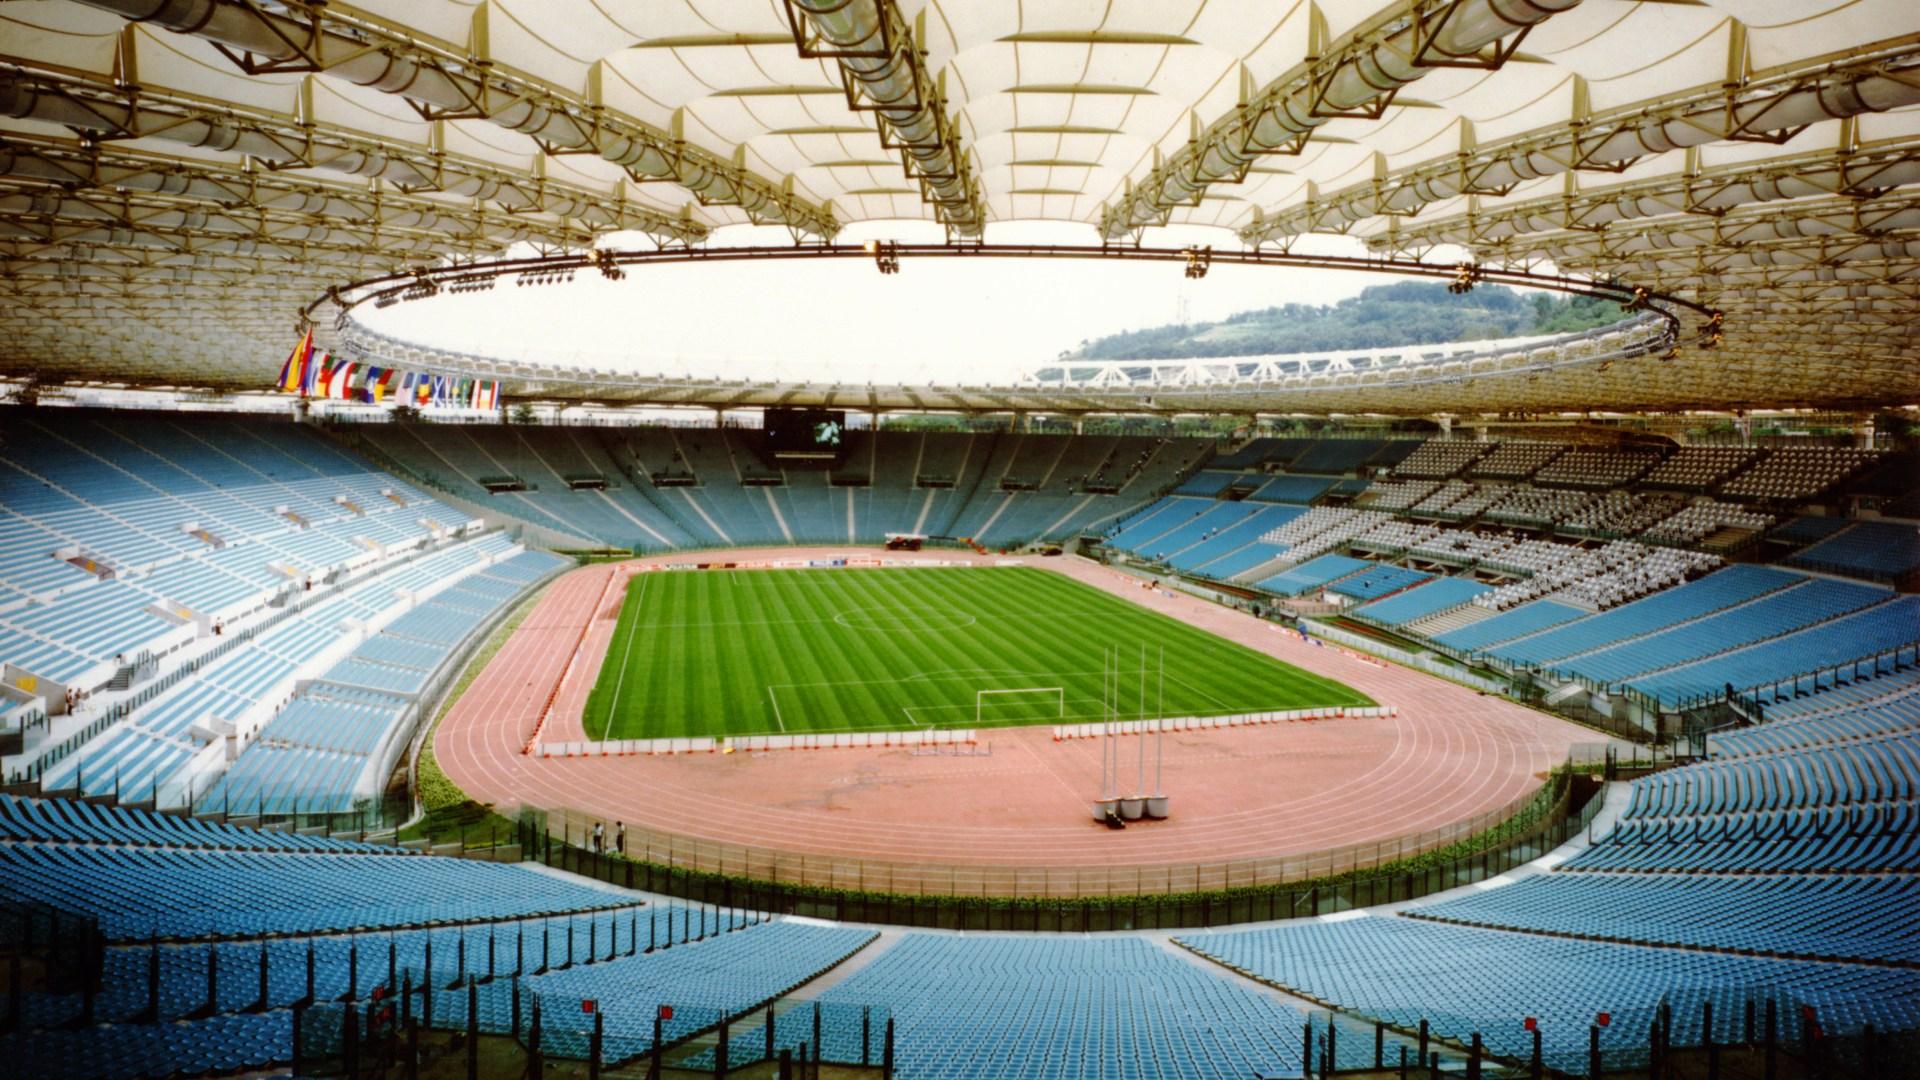 The "Stadio Olimpico" in Rome